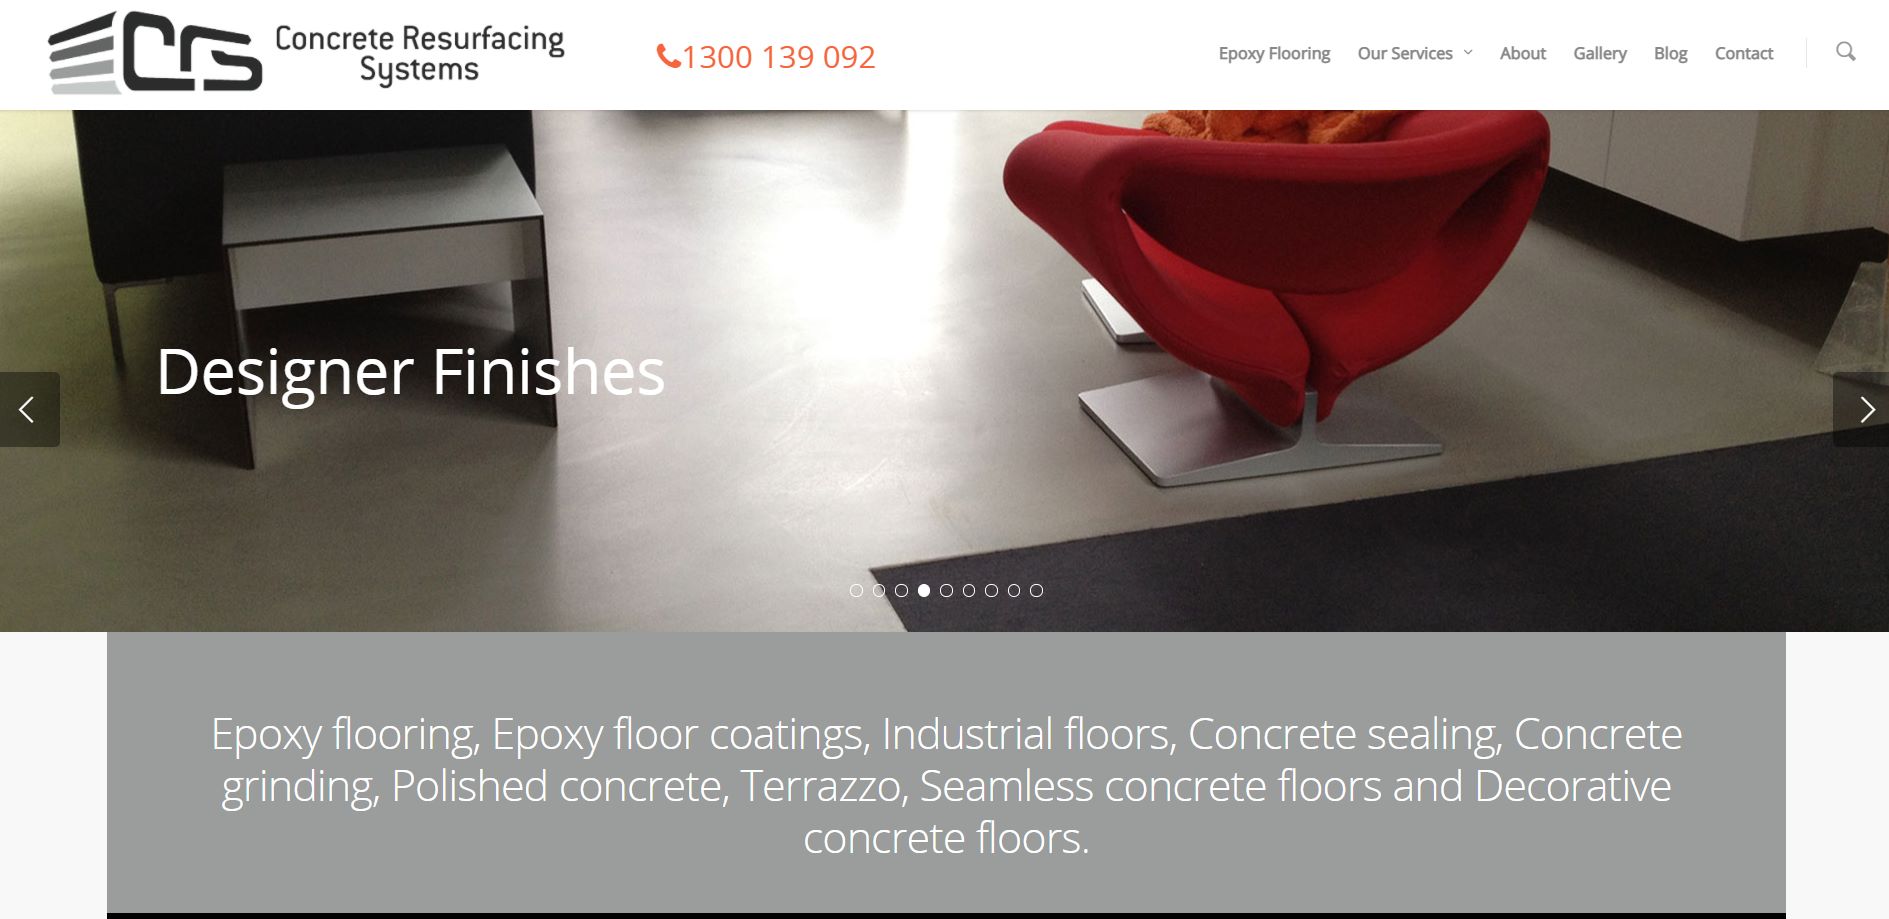 concrete resurfacing systems epoxy flooring & coatings melbourne